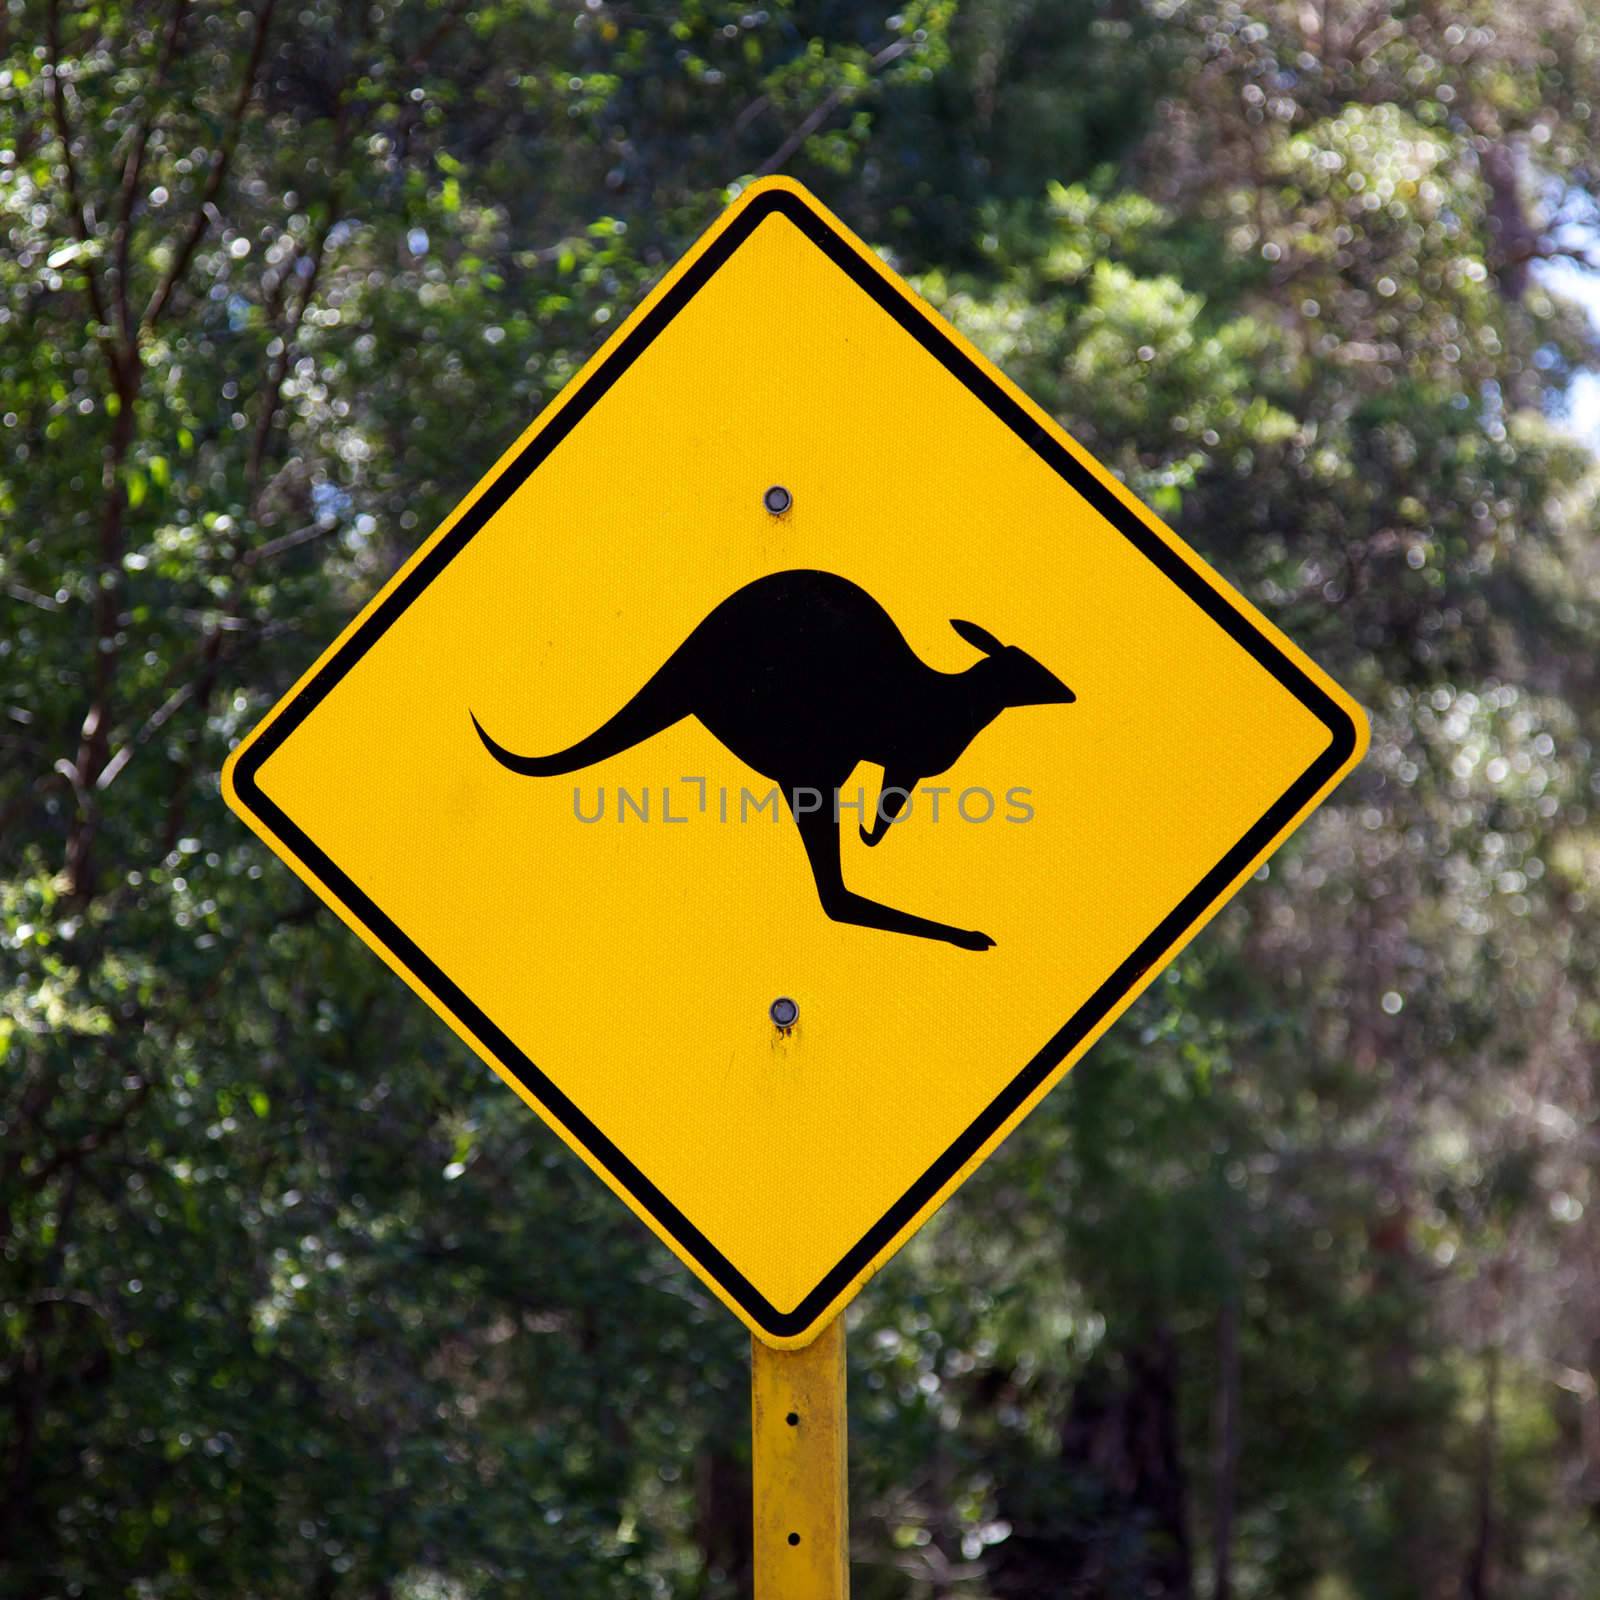 A roadside kangaroo warning sign in rural Australia.